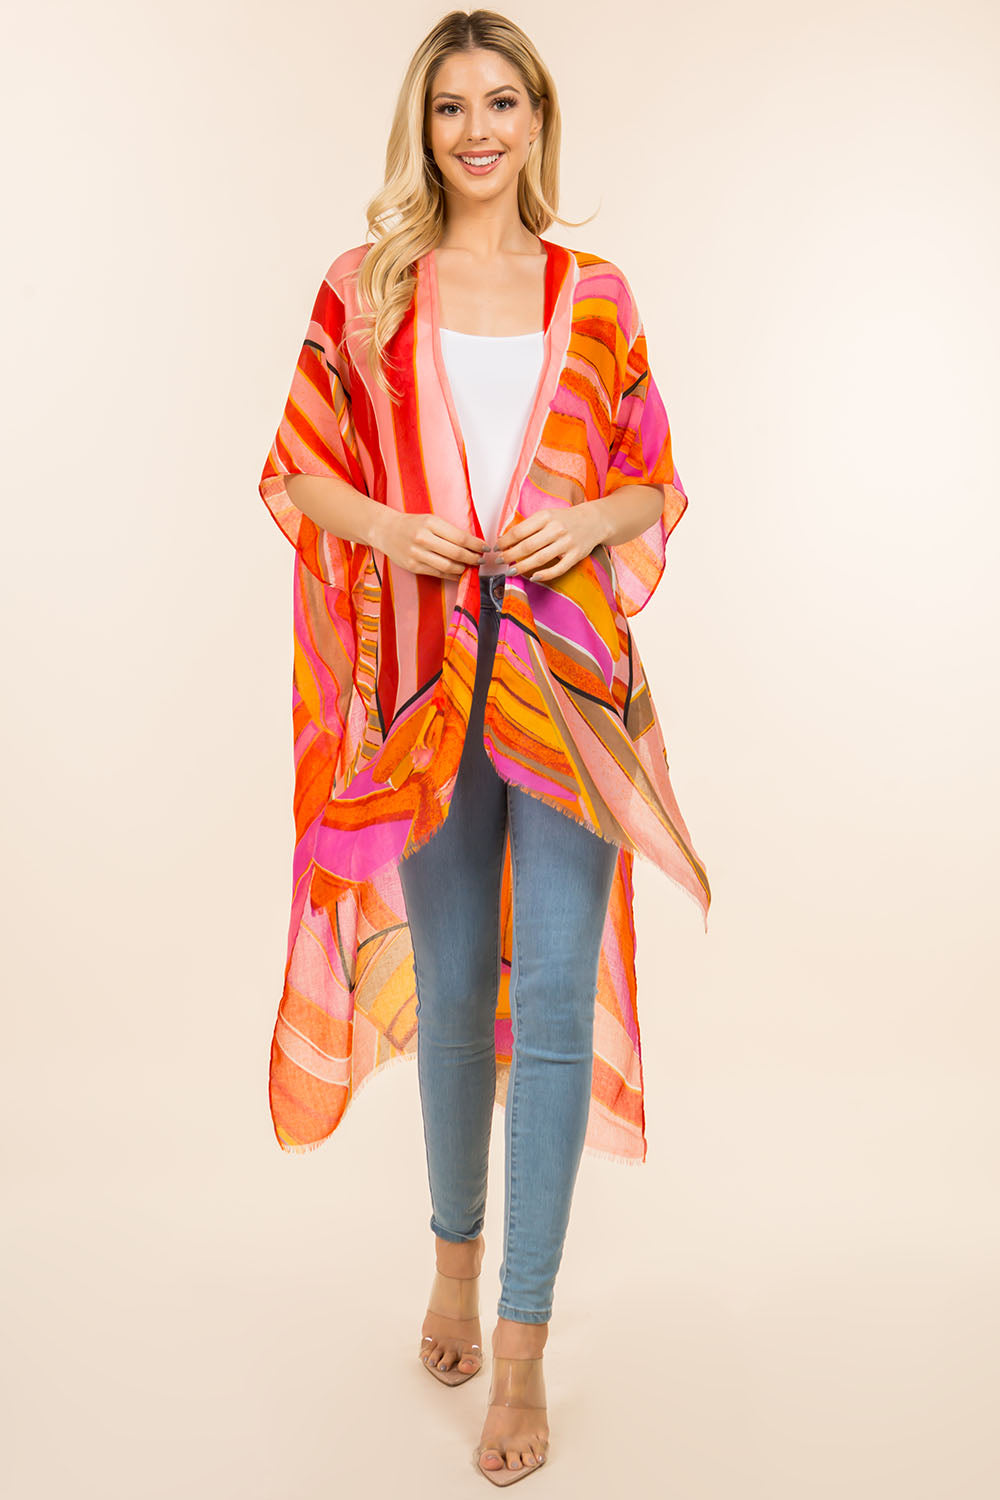 KP-4111 multi color geometric design kimono